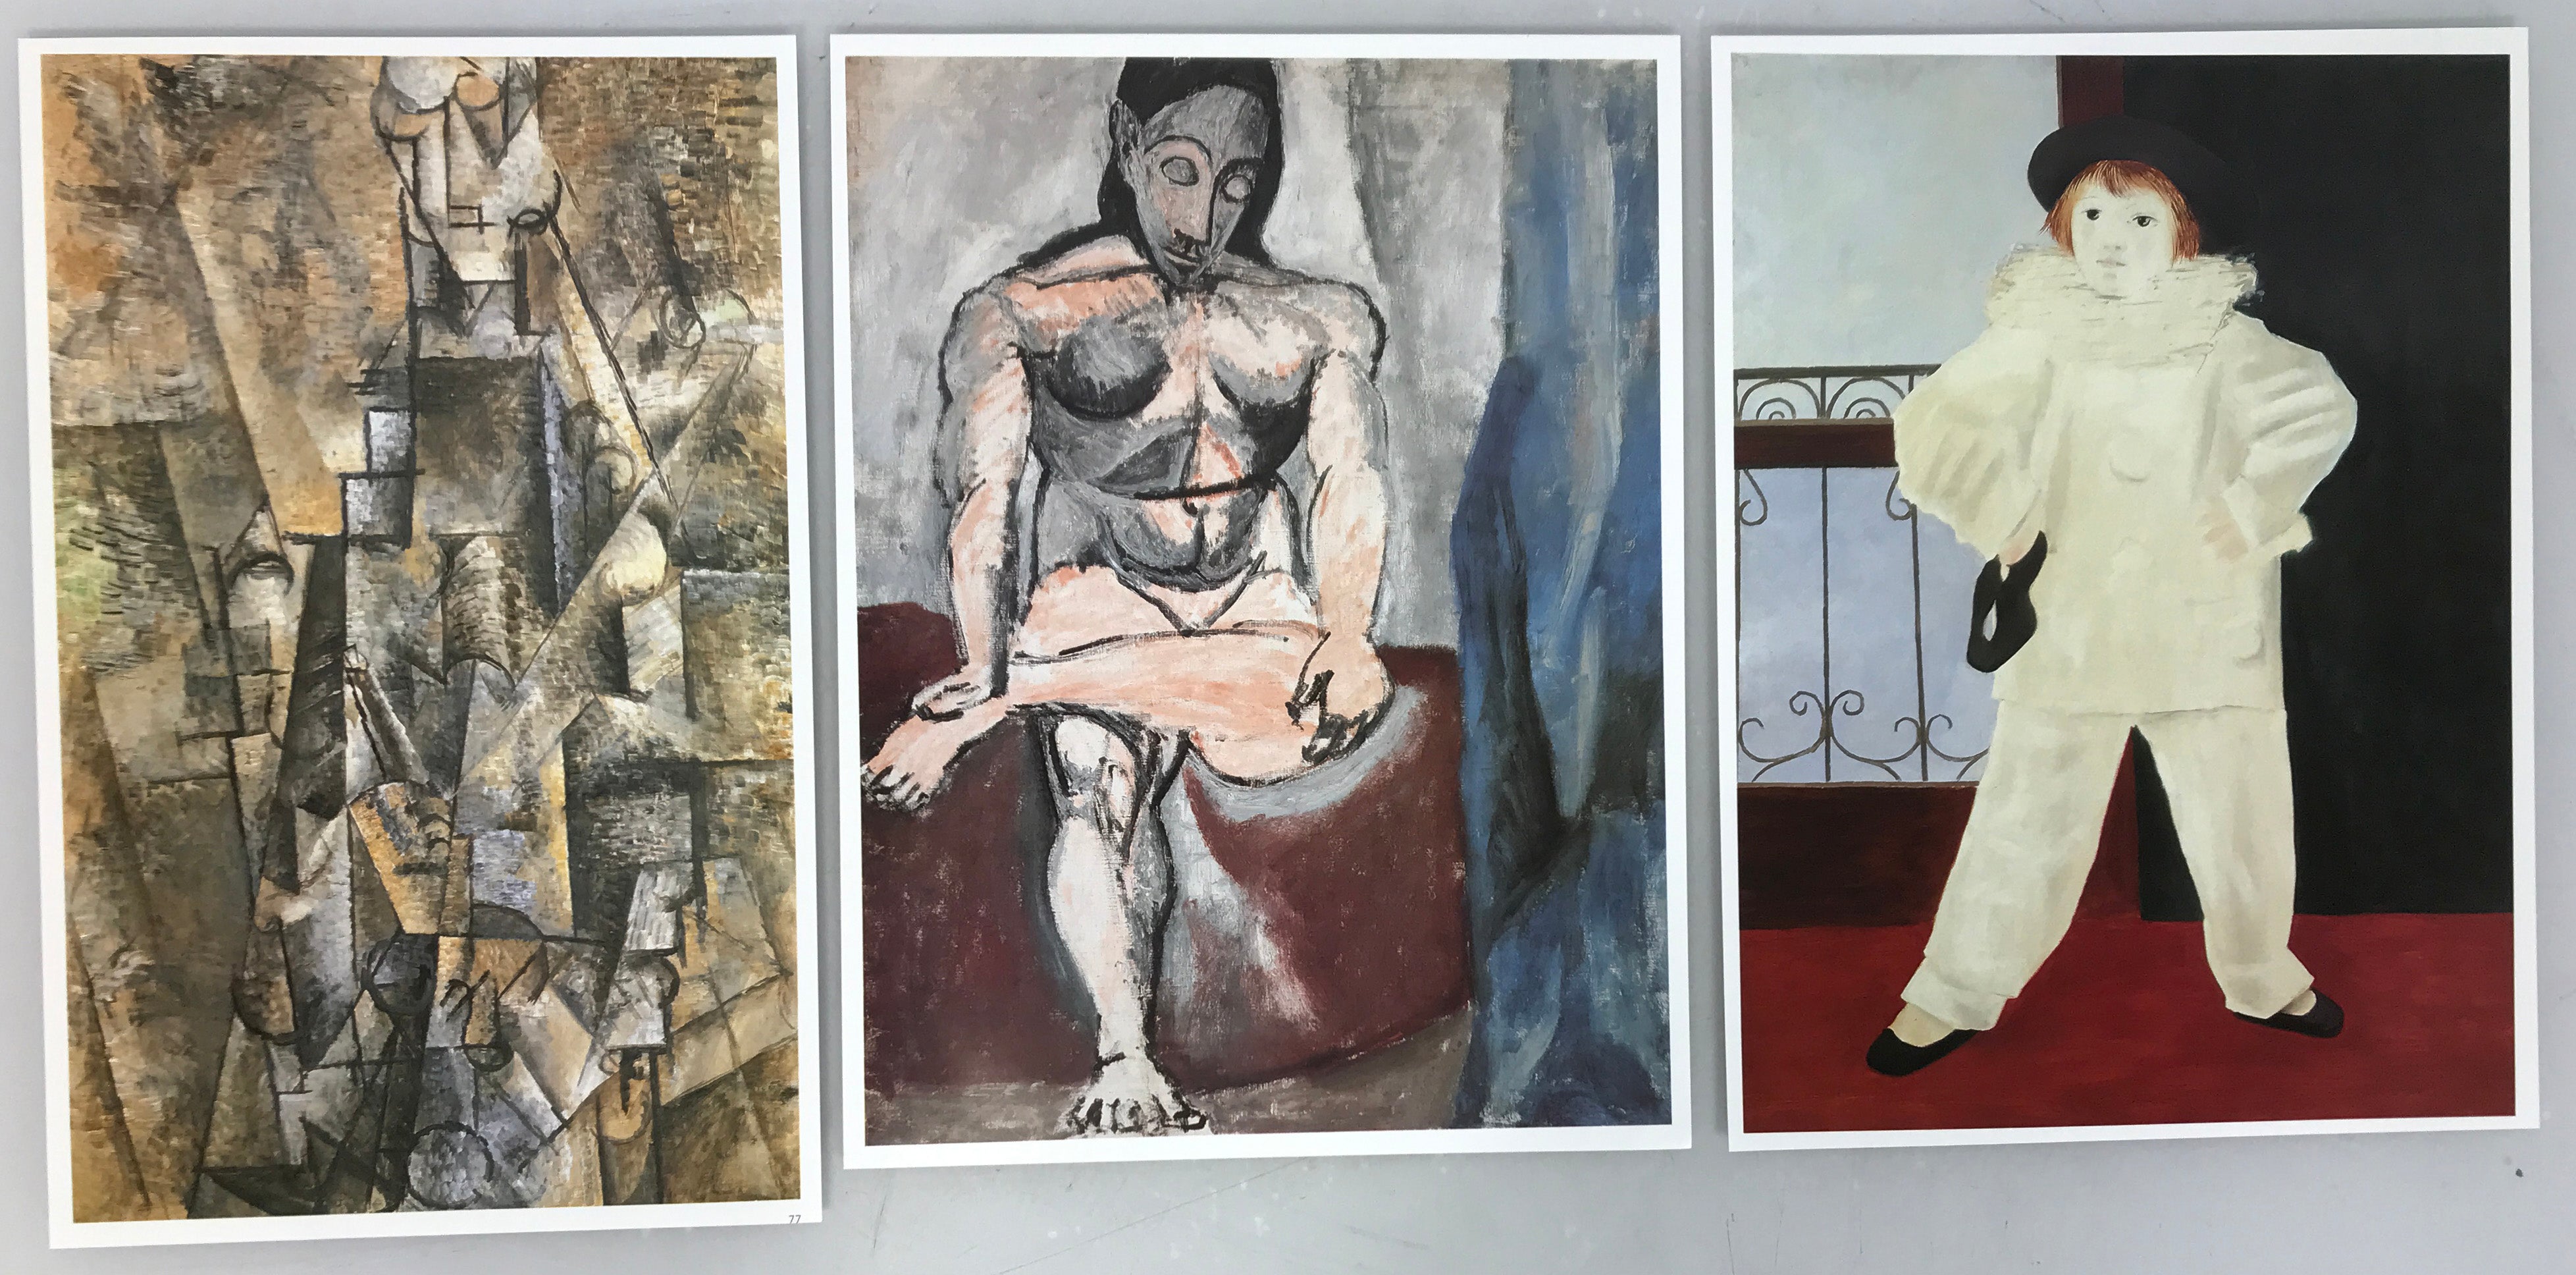 Pablo Picasso Prints